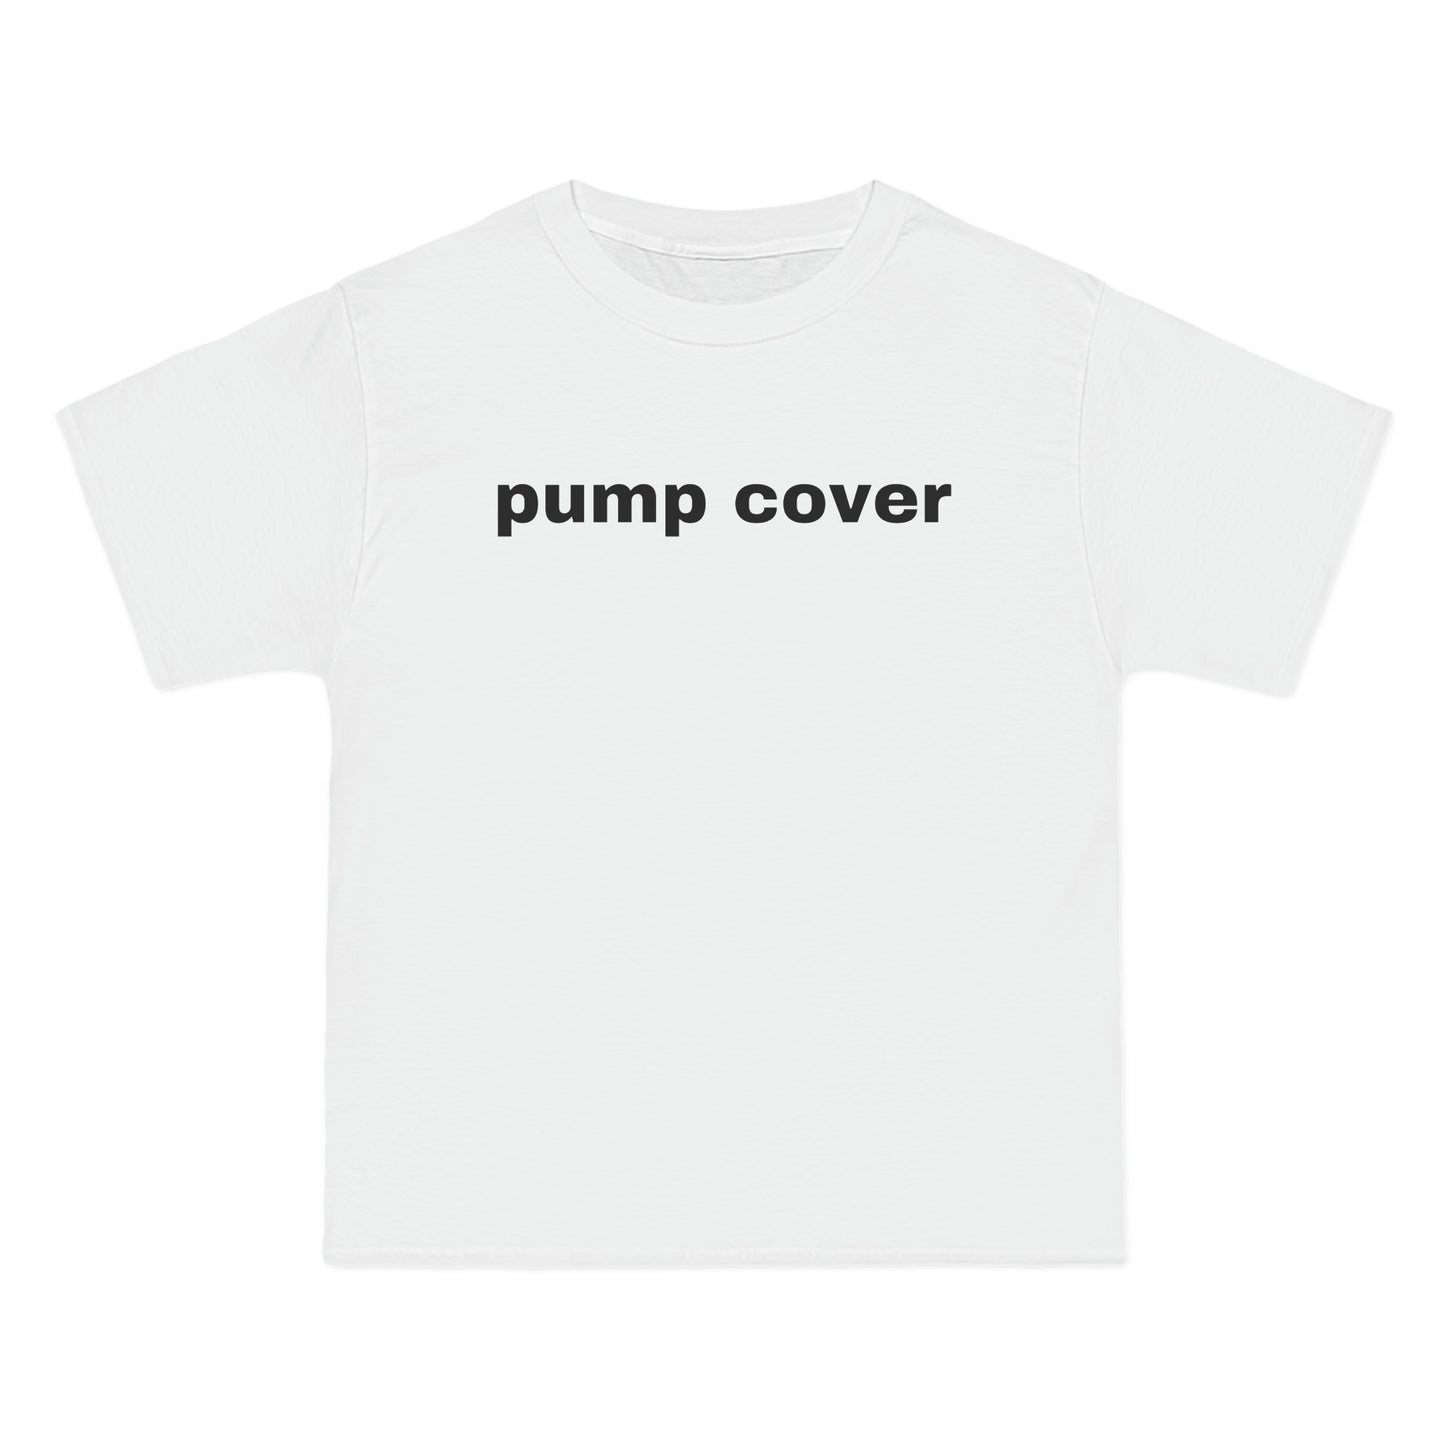 pump cover Tee